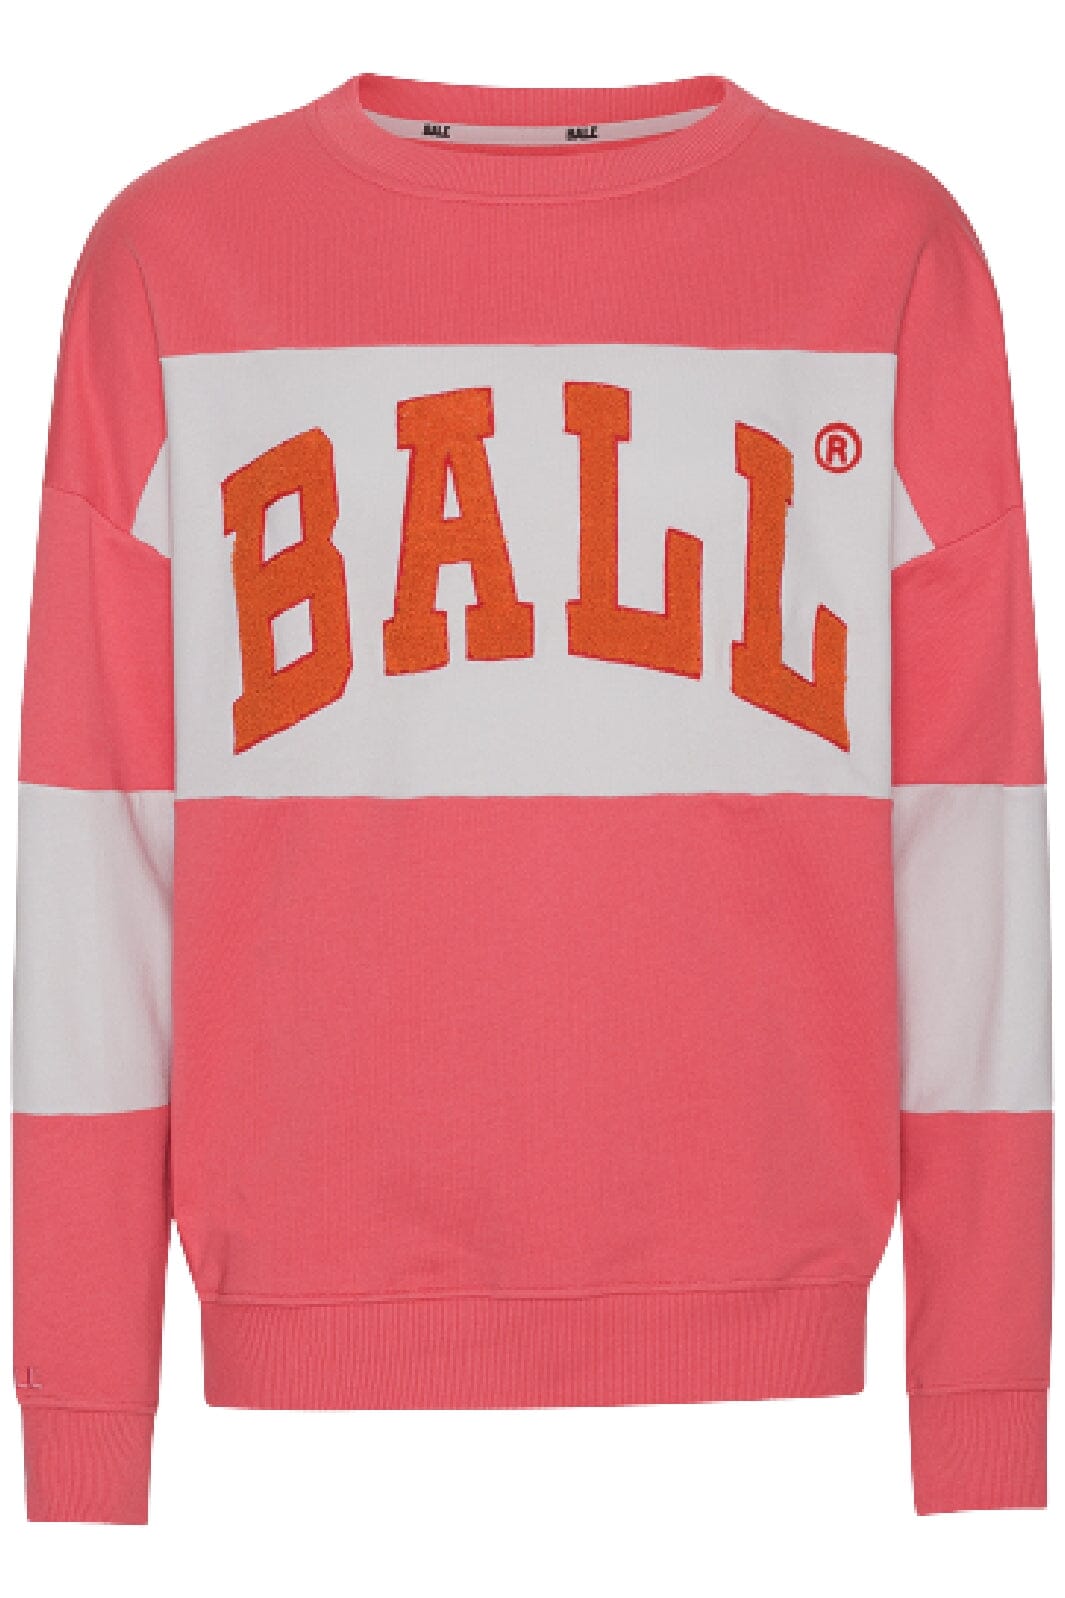 Ball - O. Zidney - Rose Hip Sweatshirts 